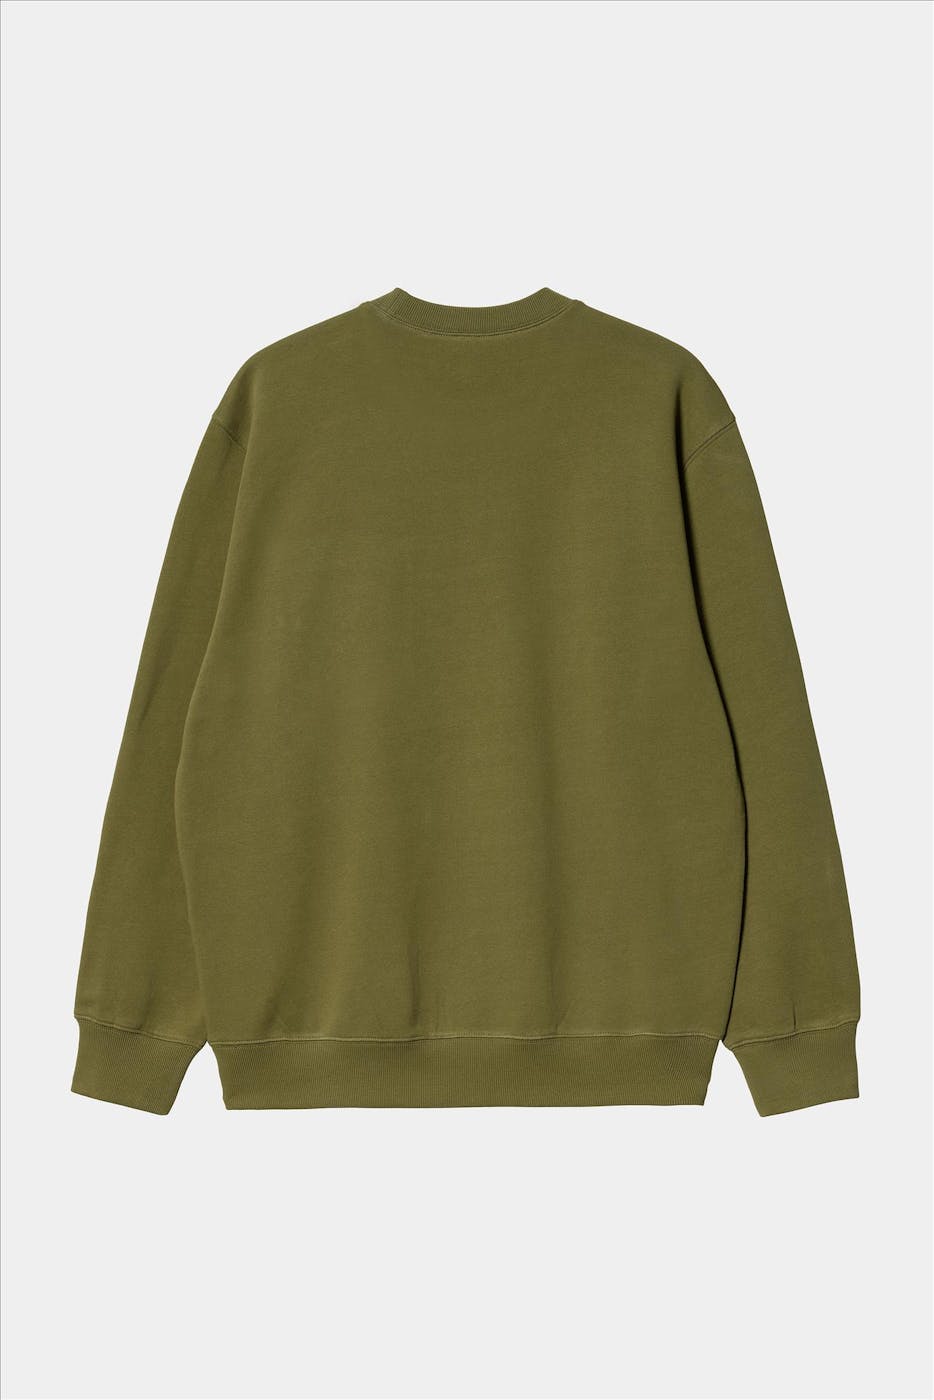 Carhartt WIP - Groene Pocket sweater